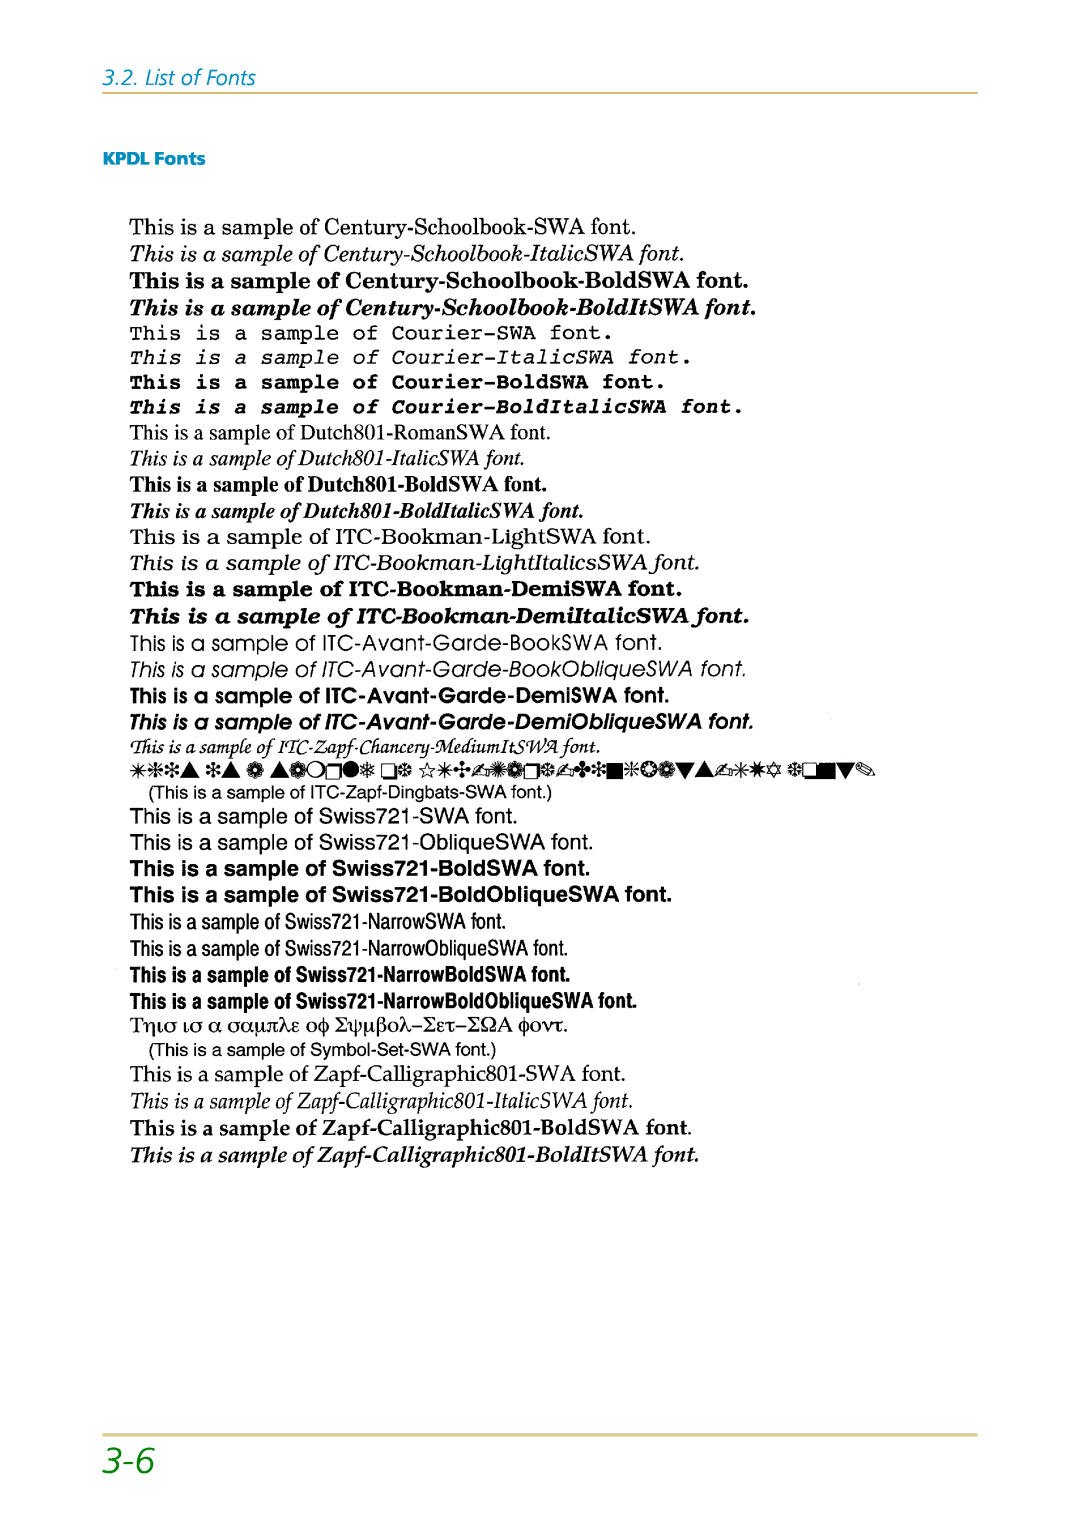 Kyocera FS-1700 user manual List of Fonts, KPDL Fonts 